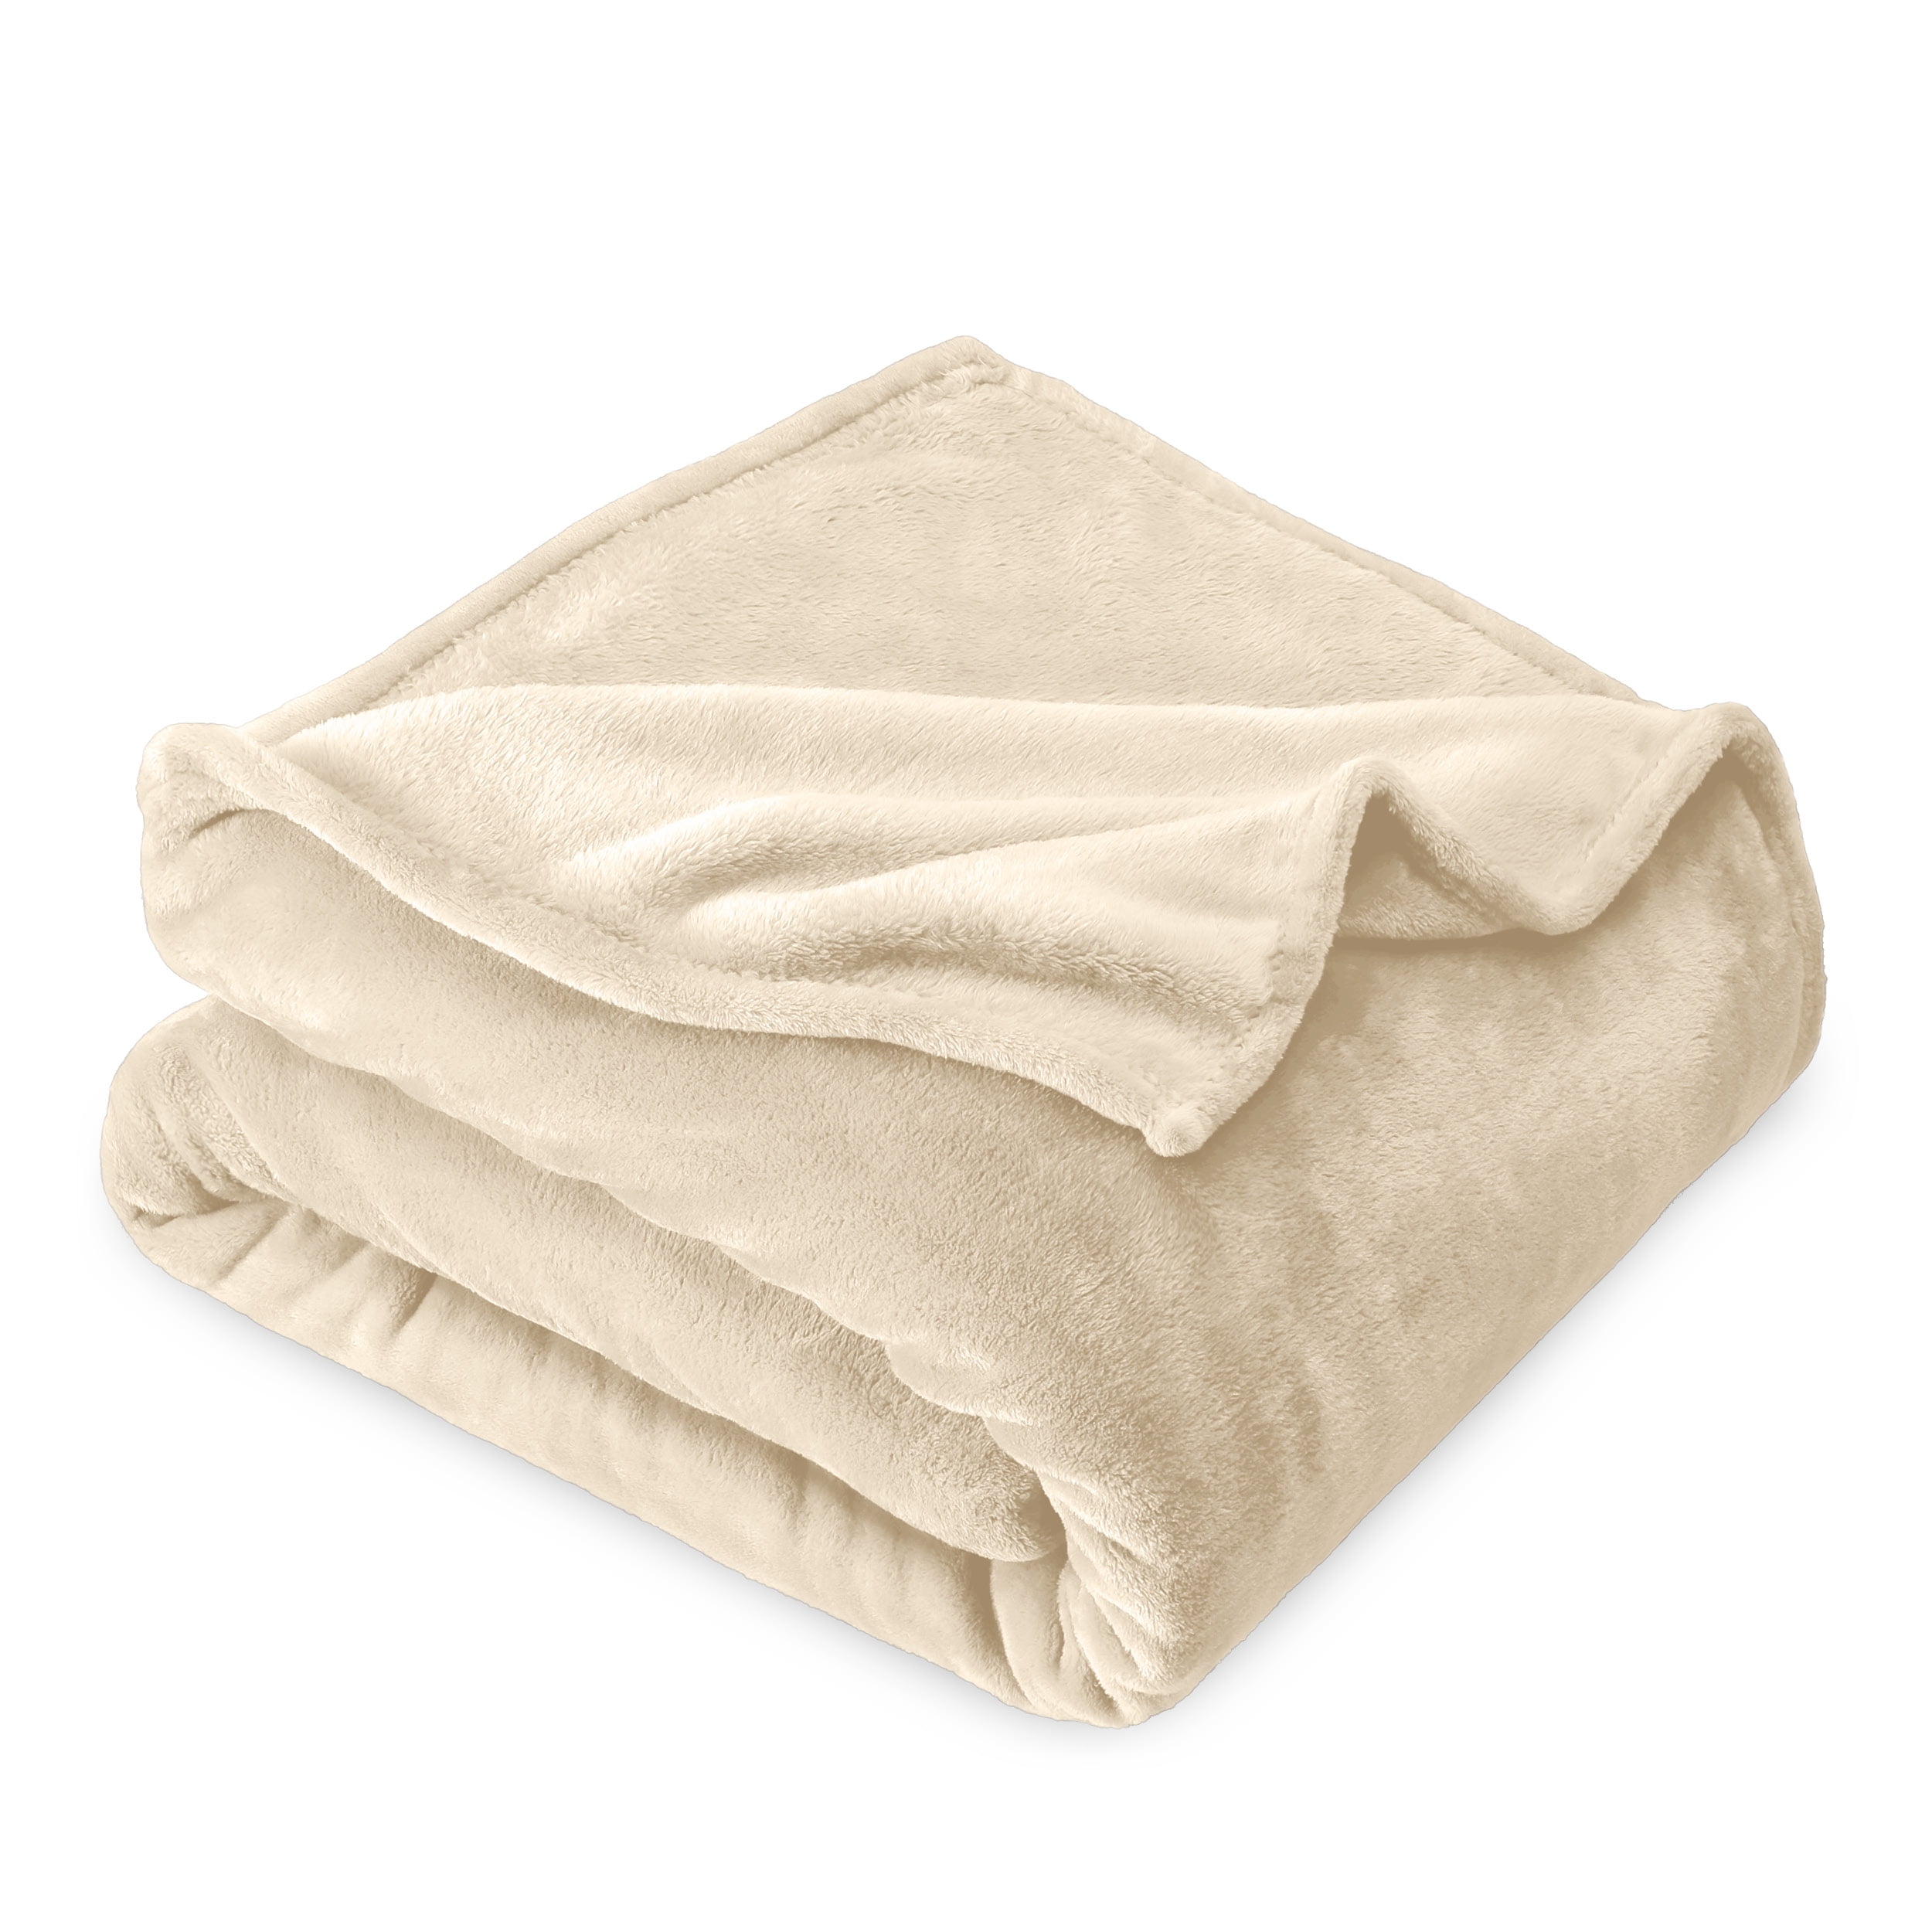 Bare Home Microplush Fleece Blanket - 300 GSM - Fuzzy Microfleece - Soft &  Plush - Throw/Travel, Oyster